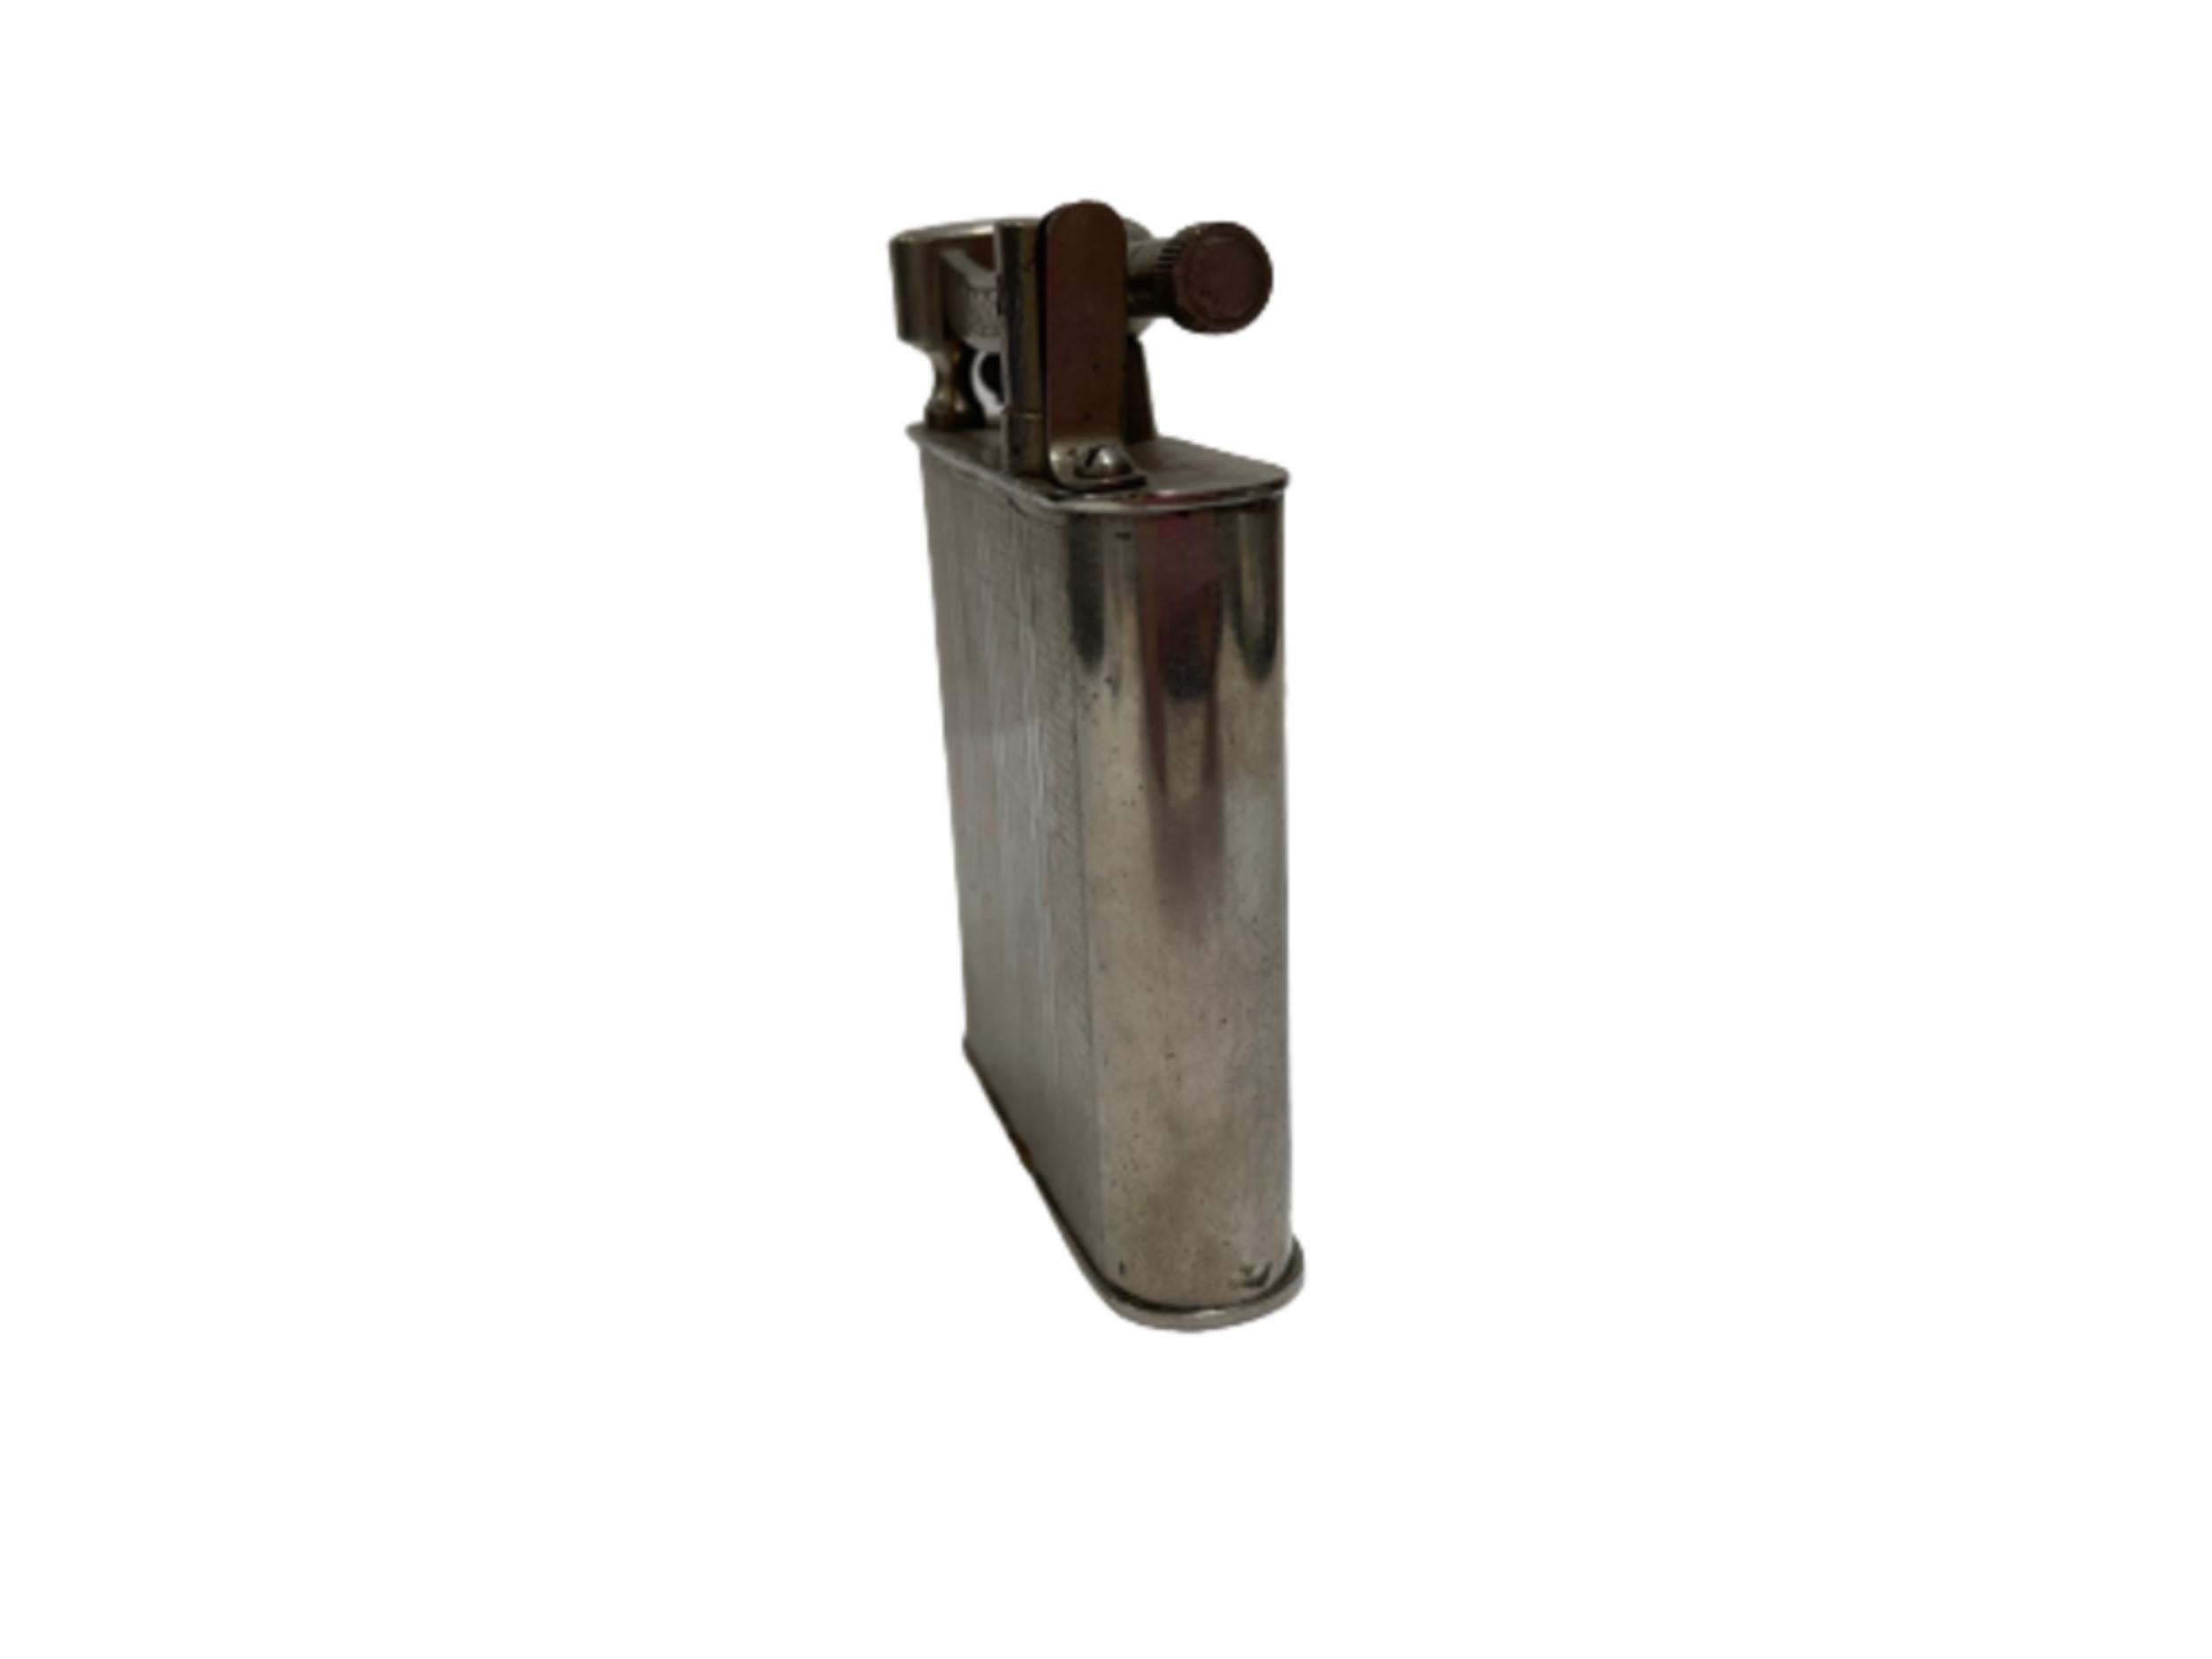 Post war lift arm chrome pocket benzine lighter by Reliance

Text on bottom of lighter: 